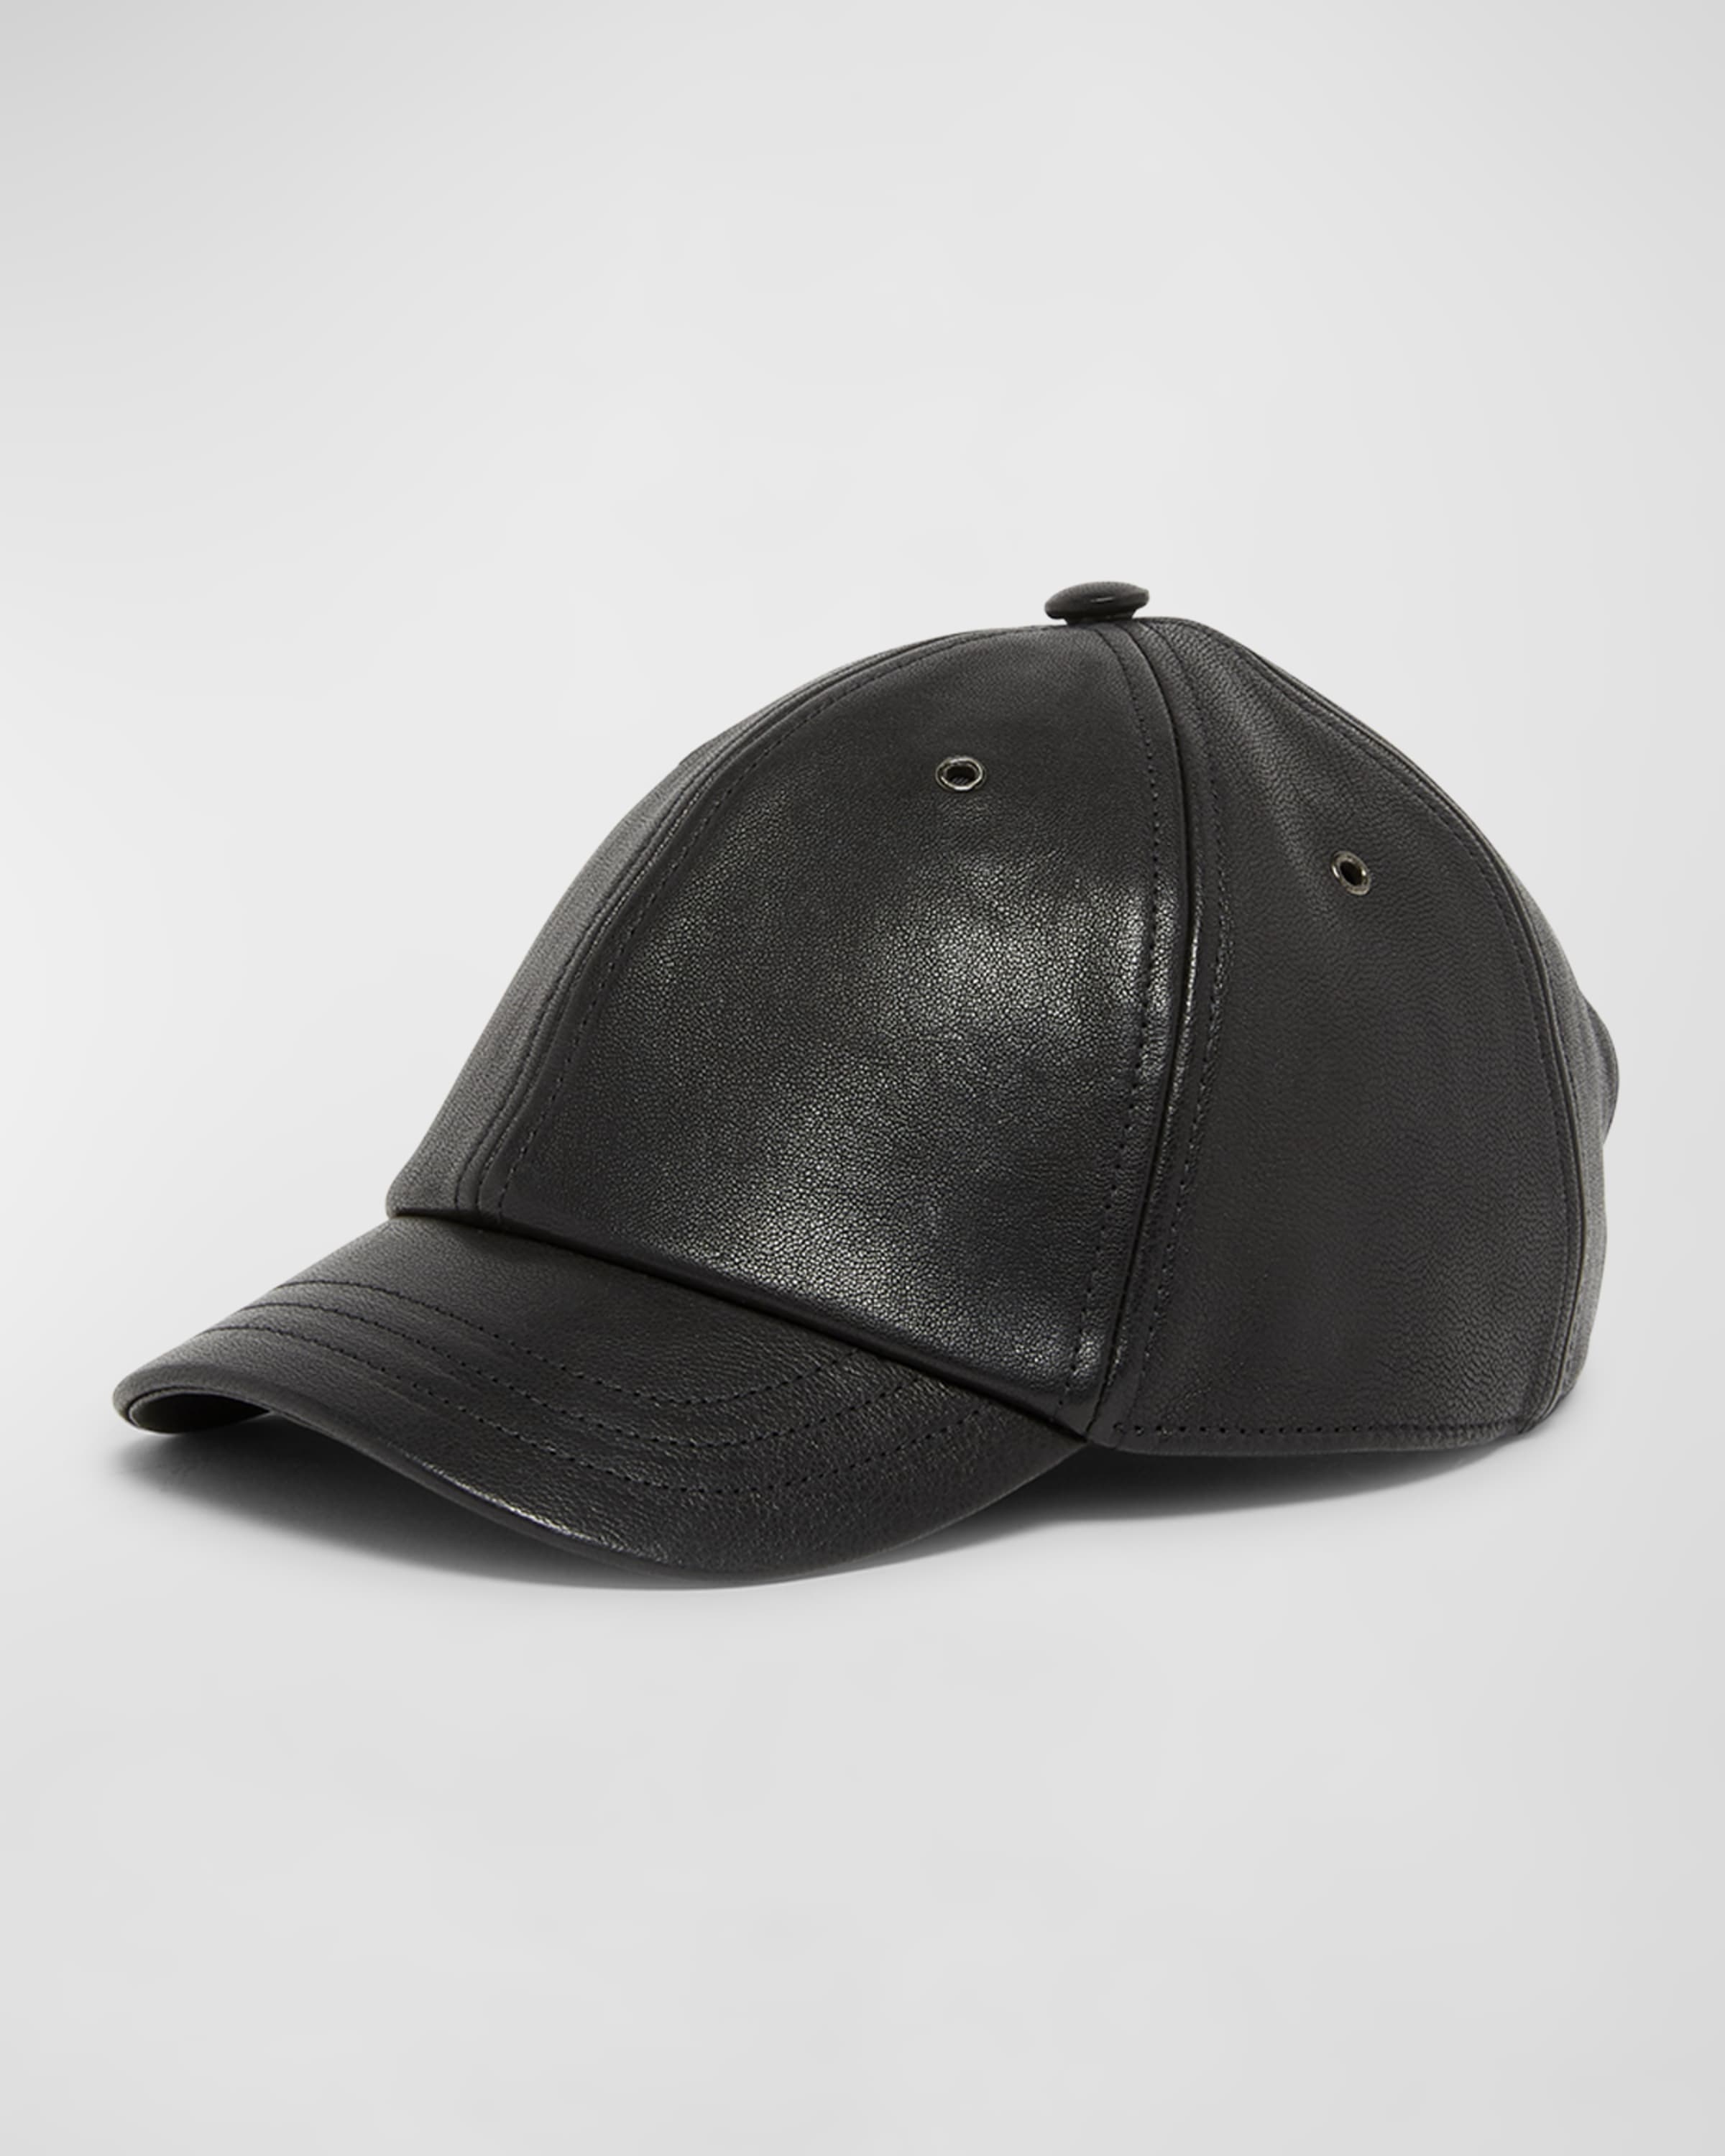 Patent Leather Baseball Hat - 1